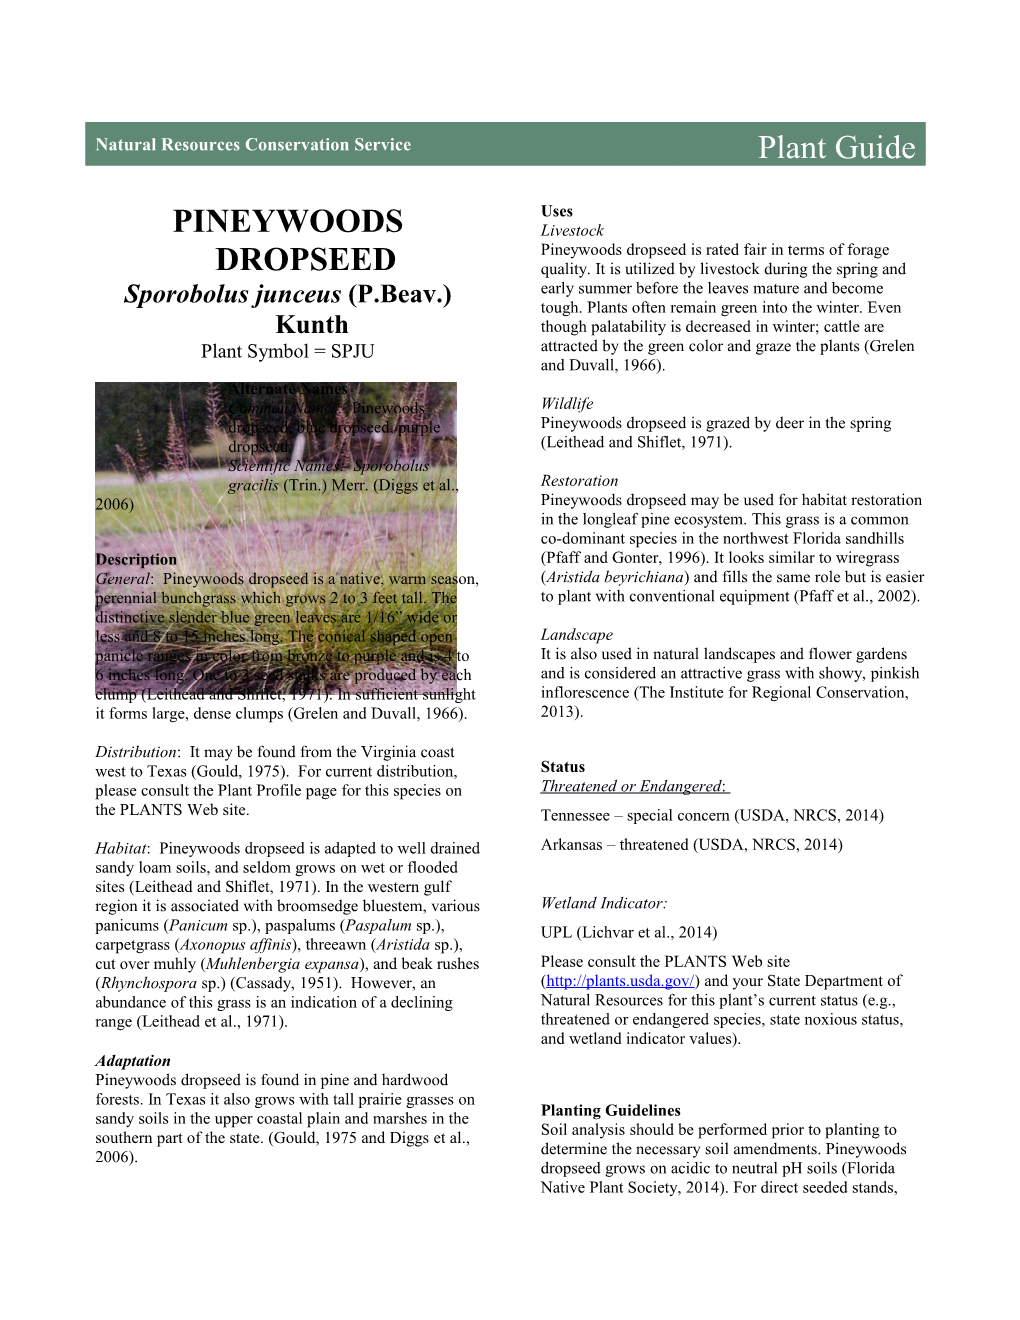 Pineywoods Dropseed (Sporobolus Junceus) Plant Guide